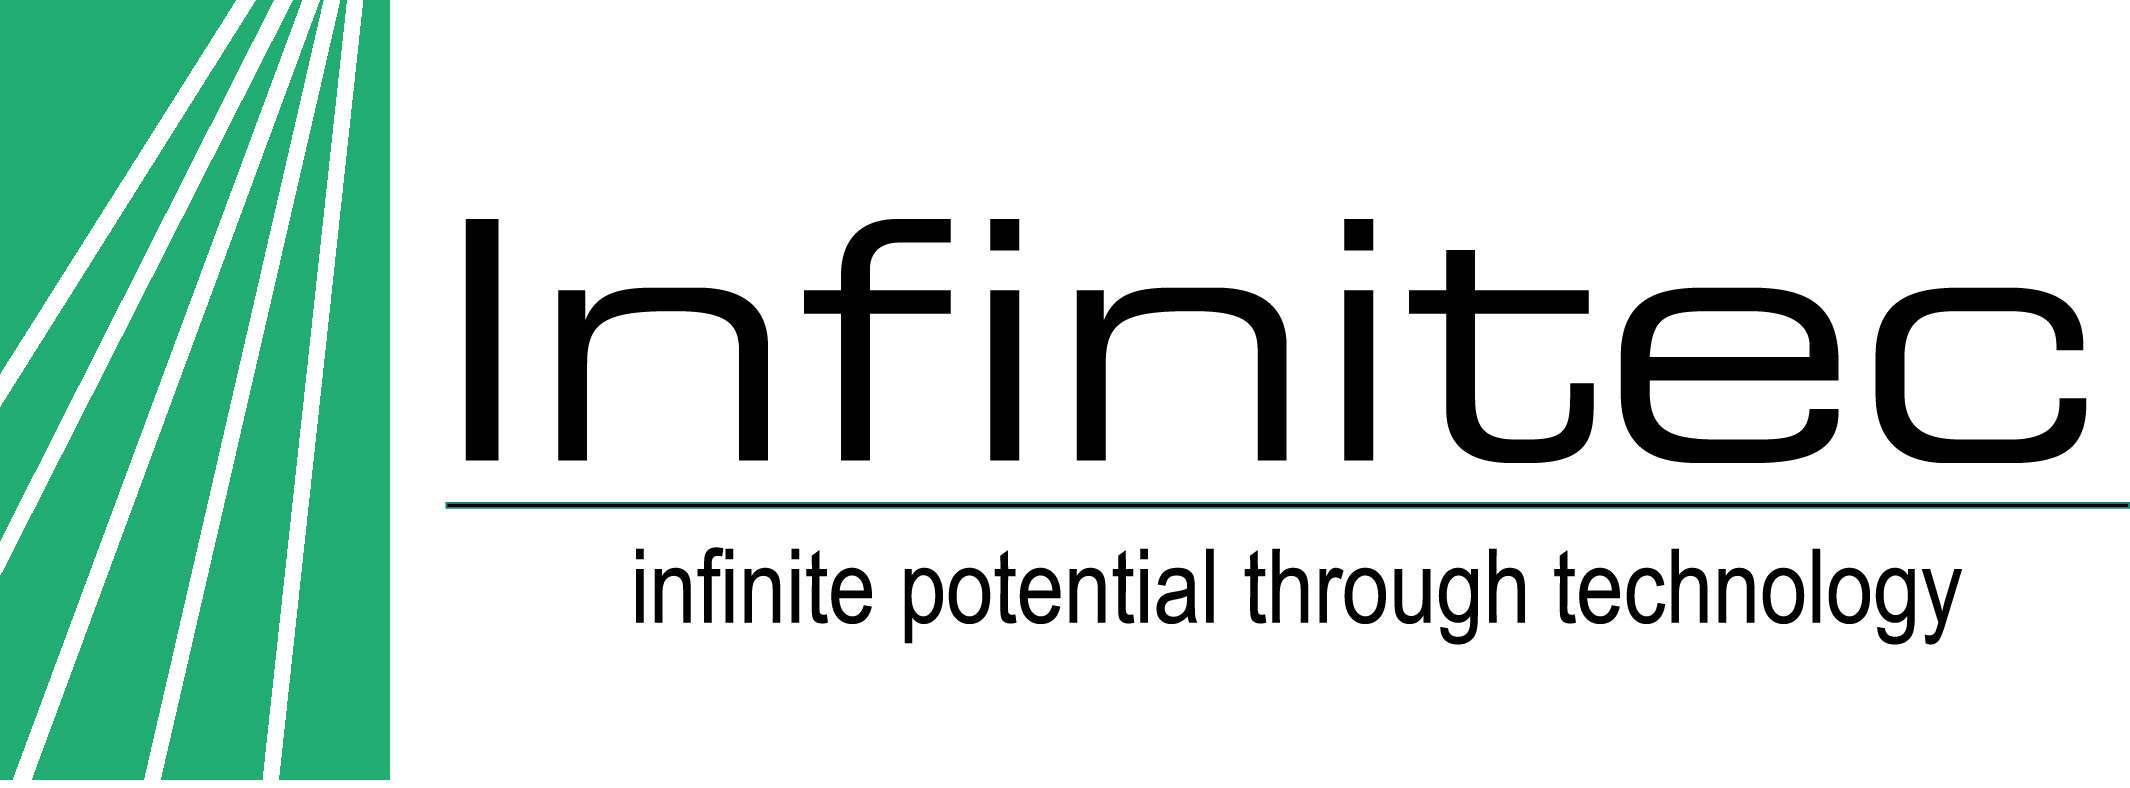 Infinitec Logo, turquoise rays, Infinitec, Infinite Potential through technology 